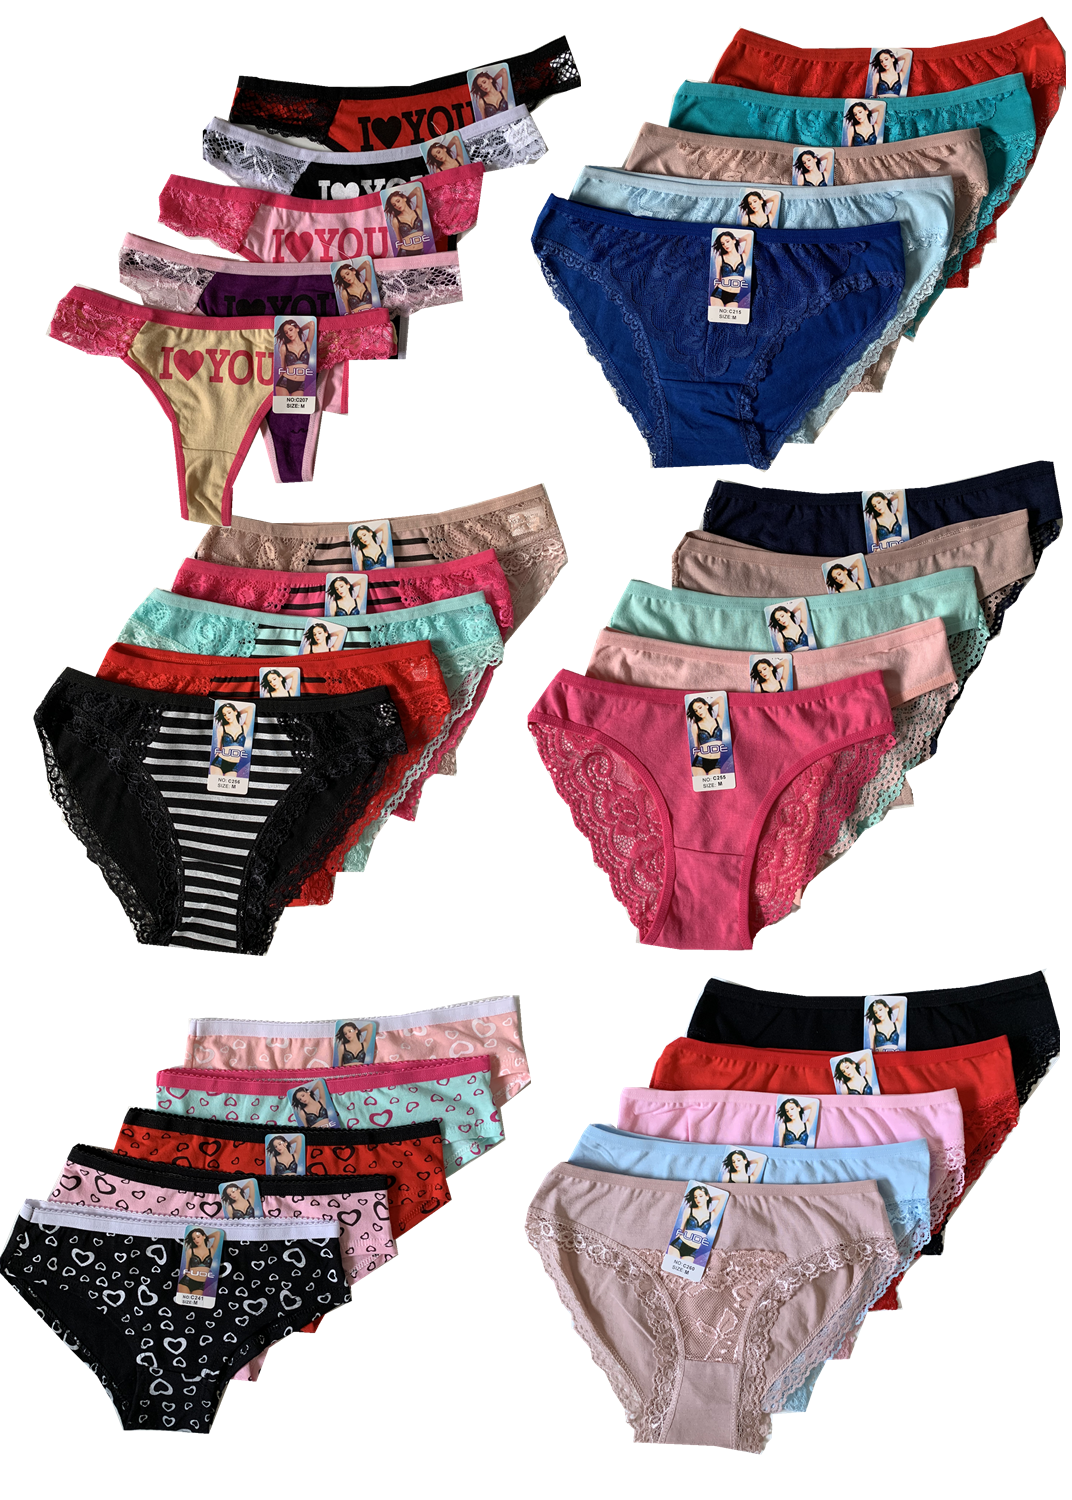 Lot Nice !!5 Women Bikini Panties Brief Floral Lace Cotton Underwear Size M L Xl